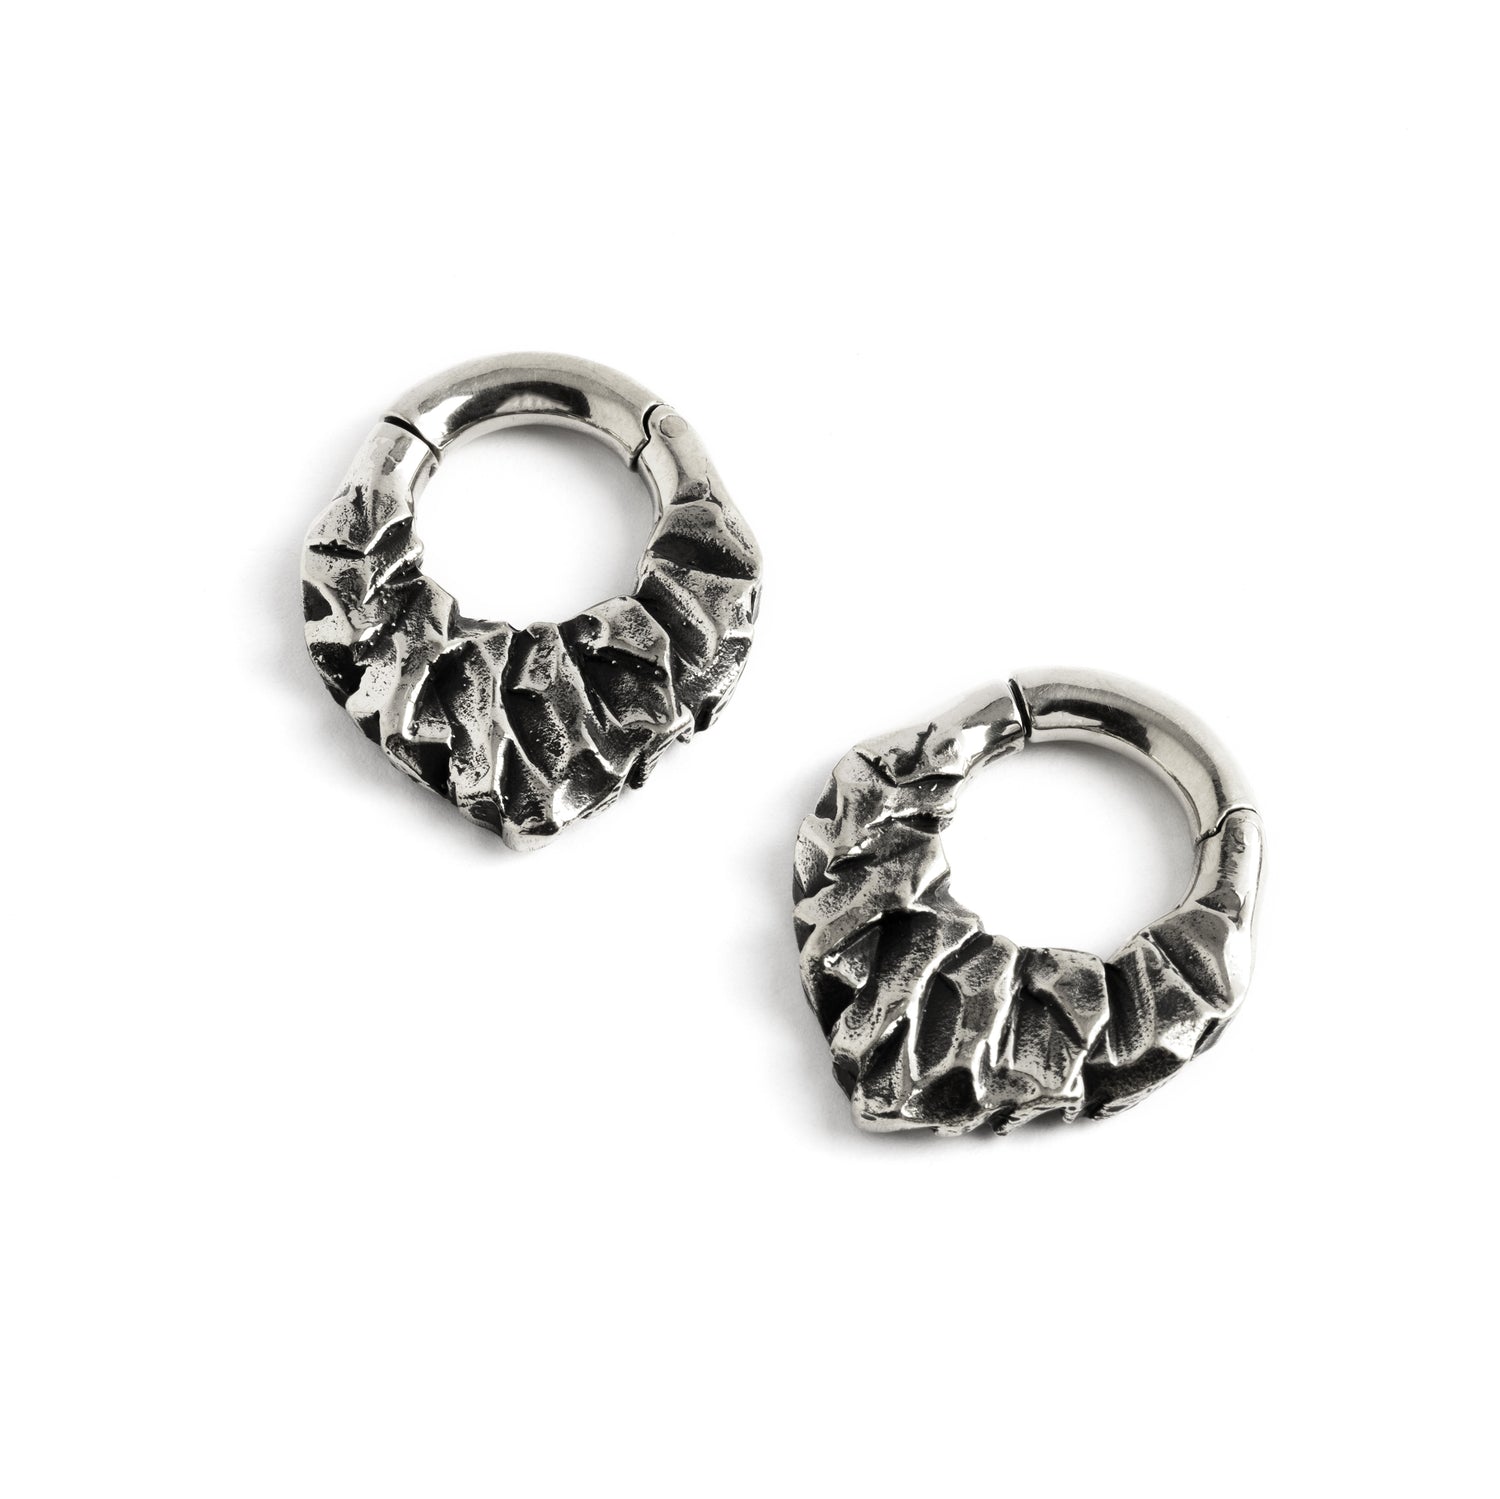 pair of silver brass teardrop shaped ear hoops hangers with rocky texture